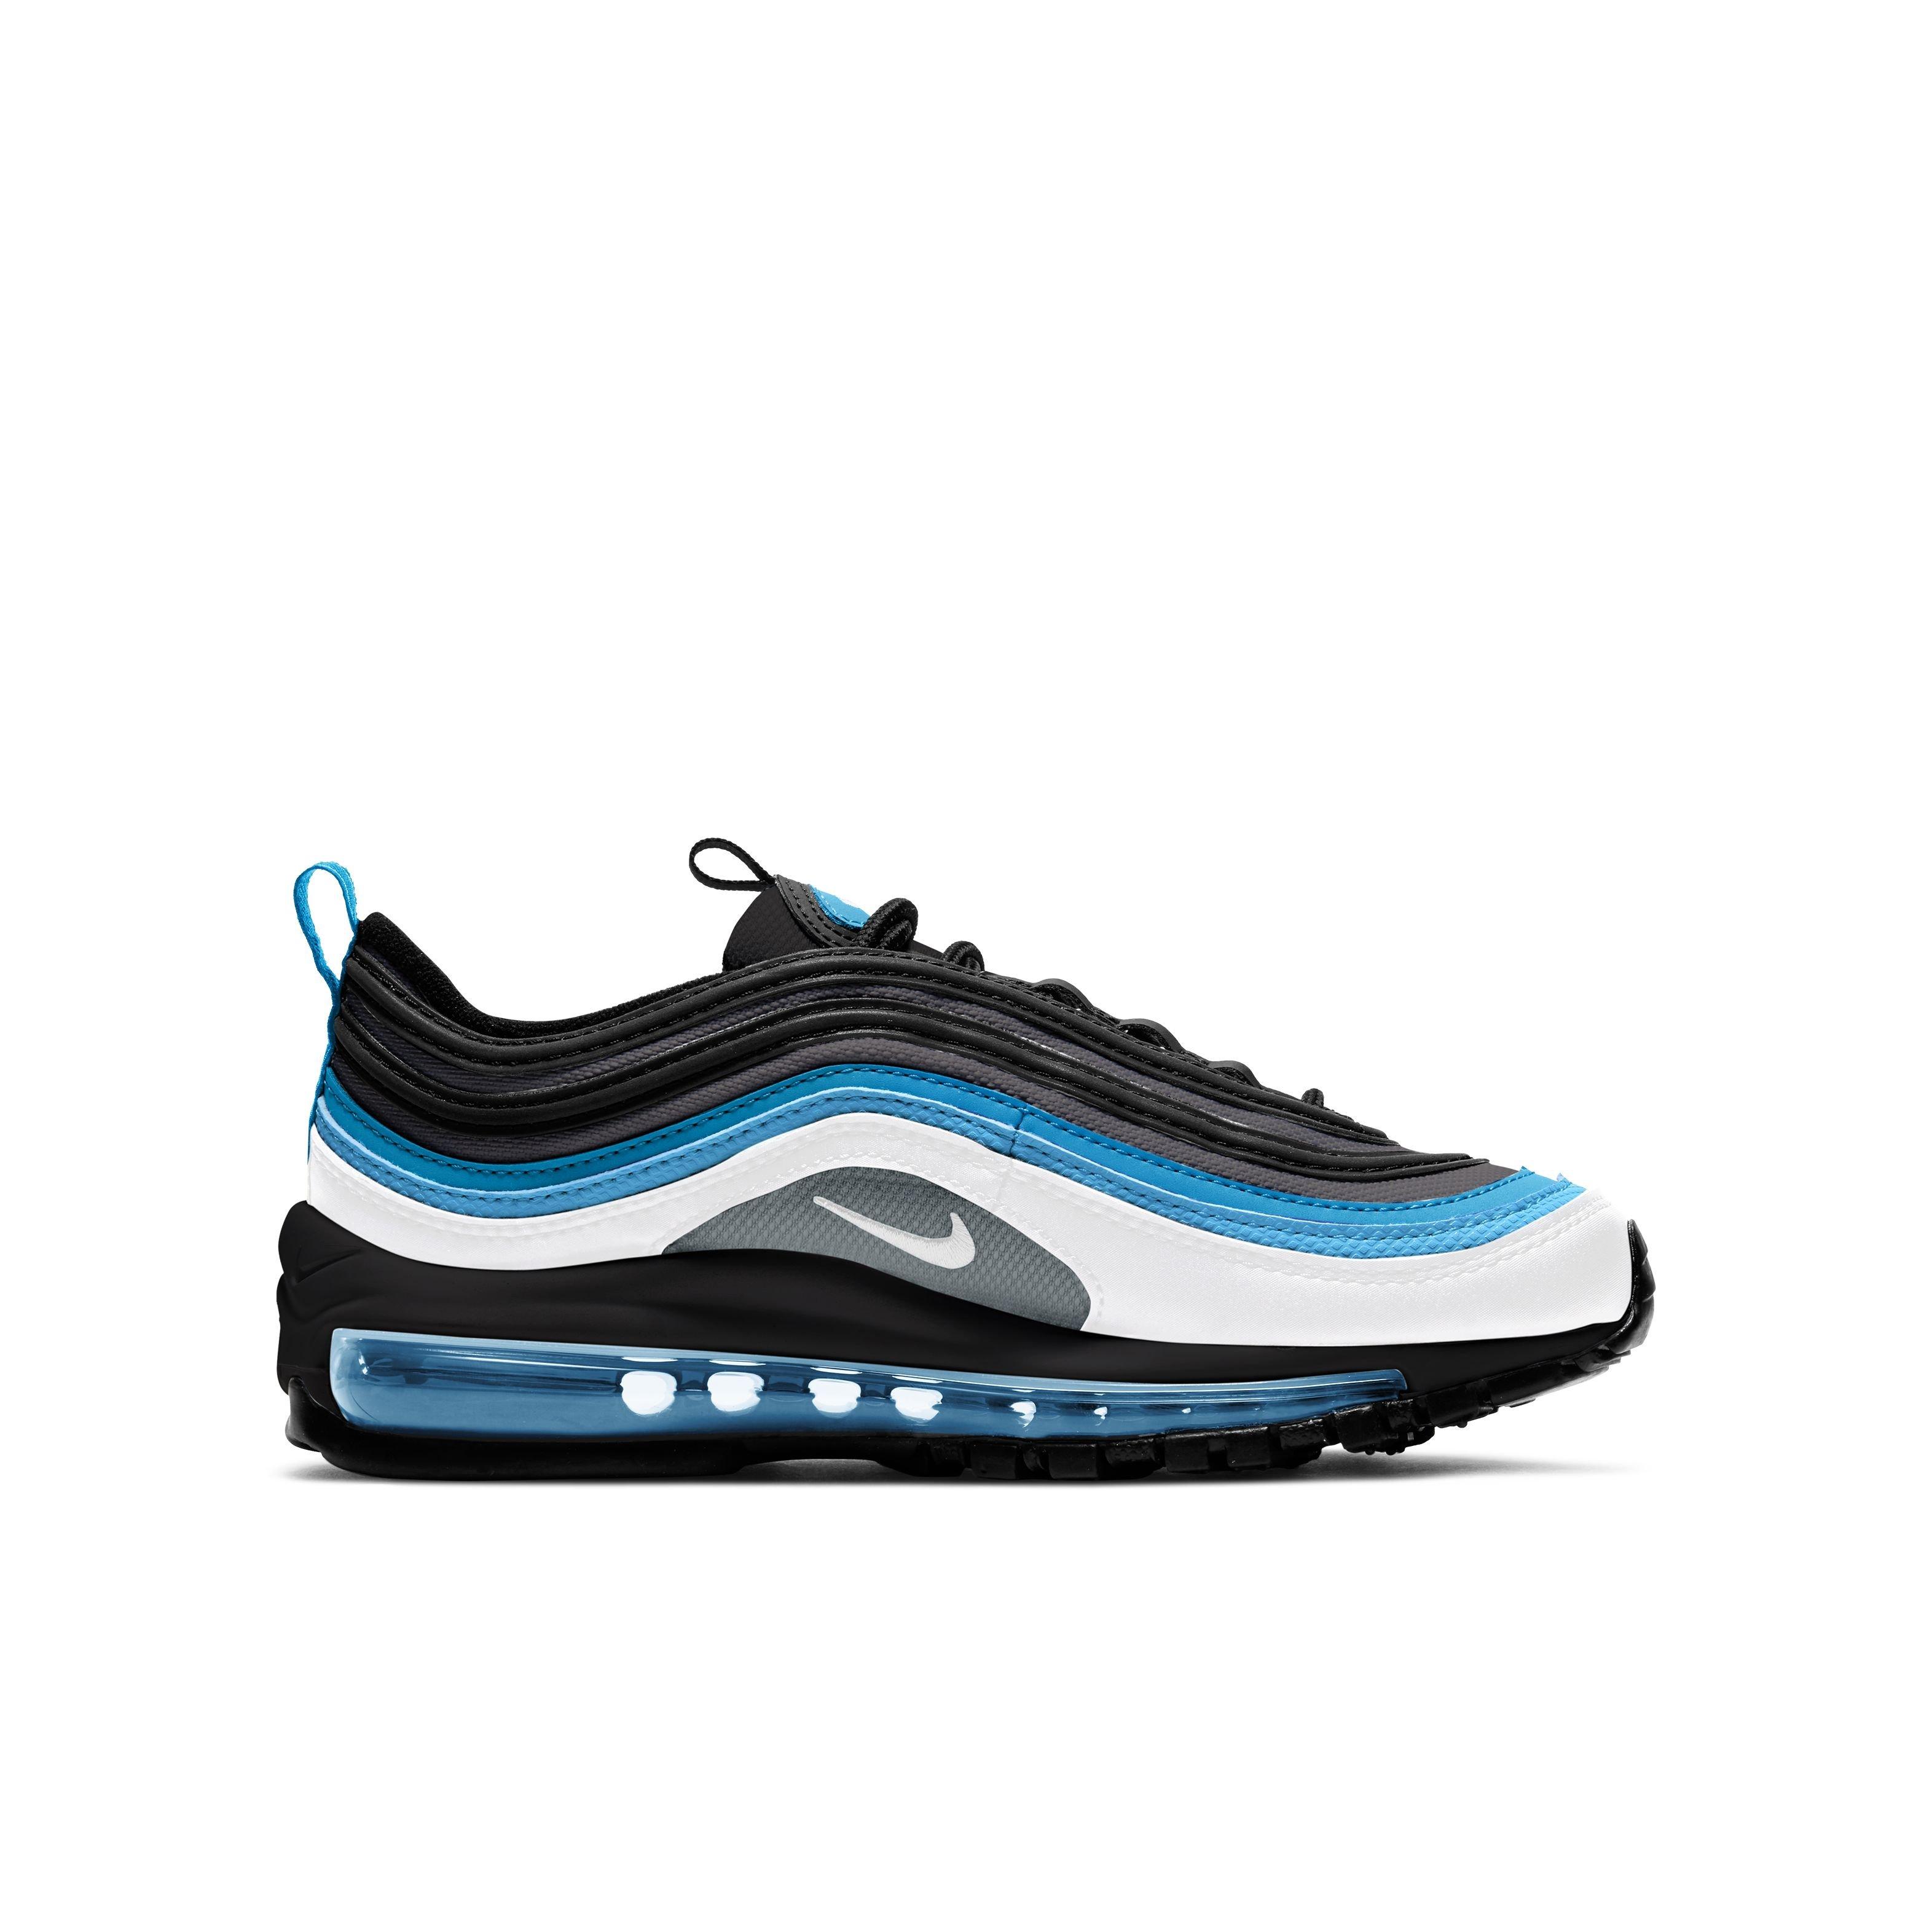 Blij Uitdrukkelijk Boer Nike Air Max 97 "Black/Blue/White" Grade School Kids' Shoe